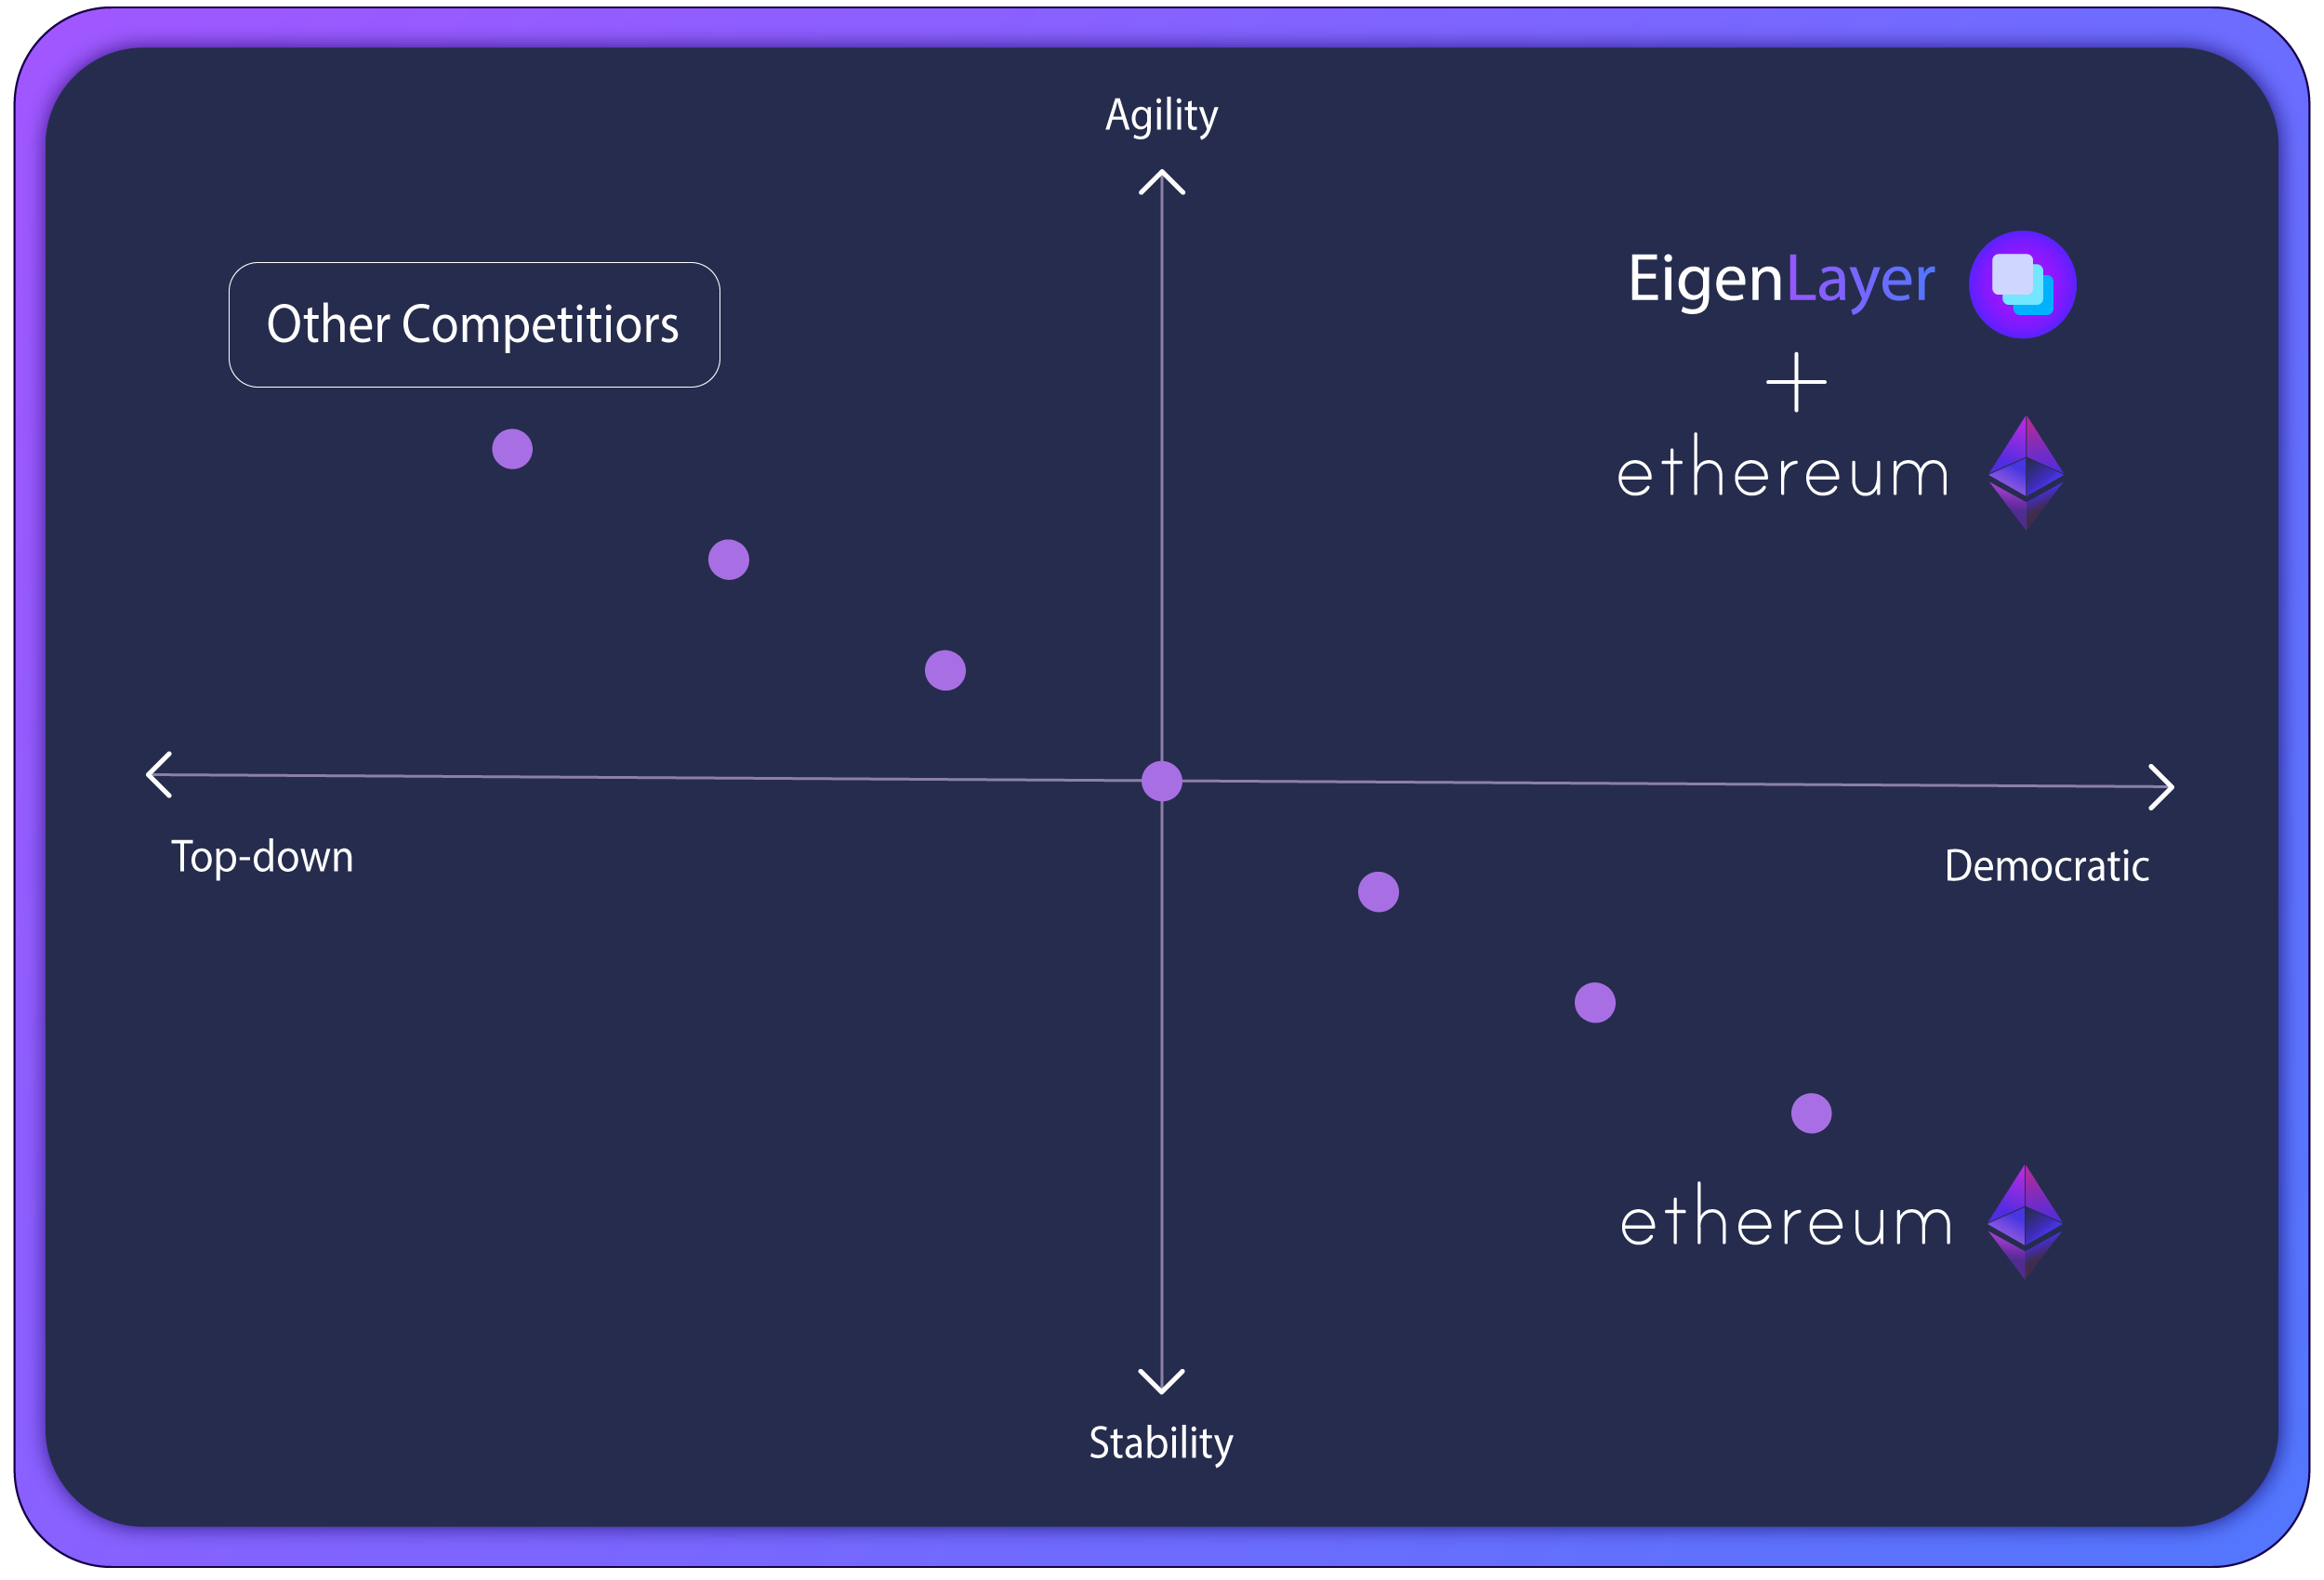 EigenLayer + Ethereum enables Agility 